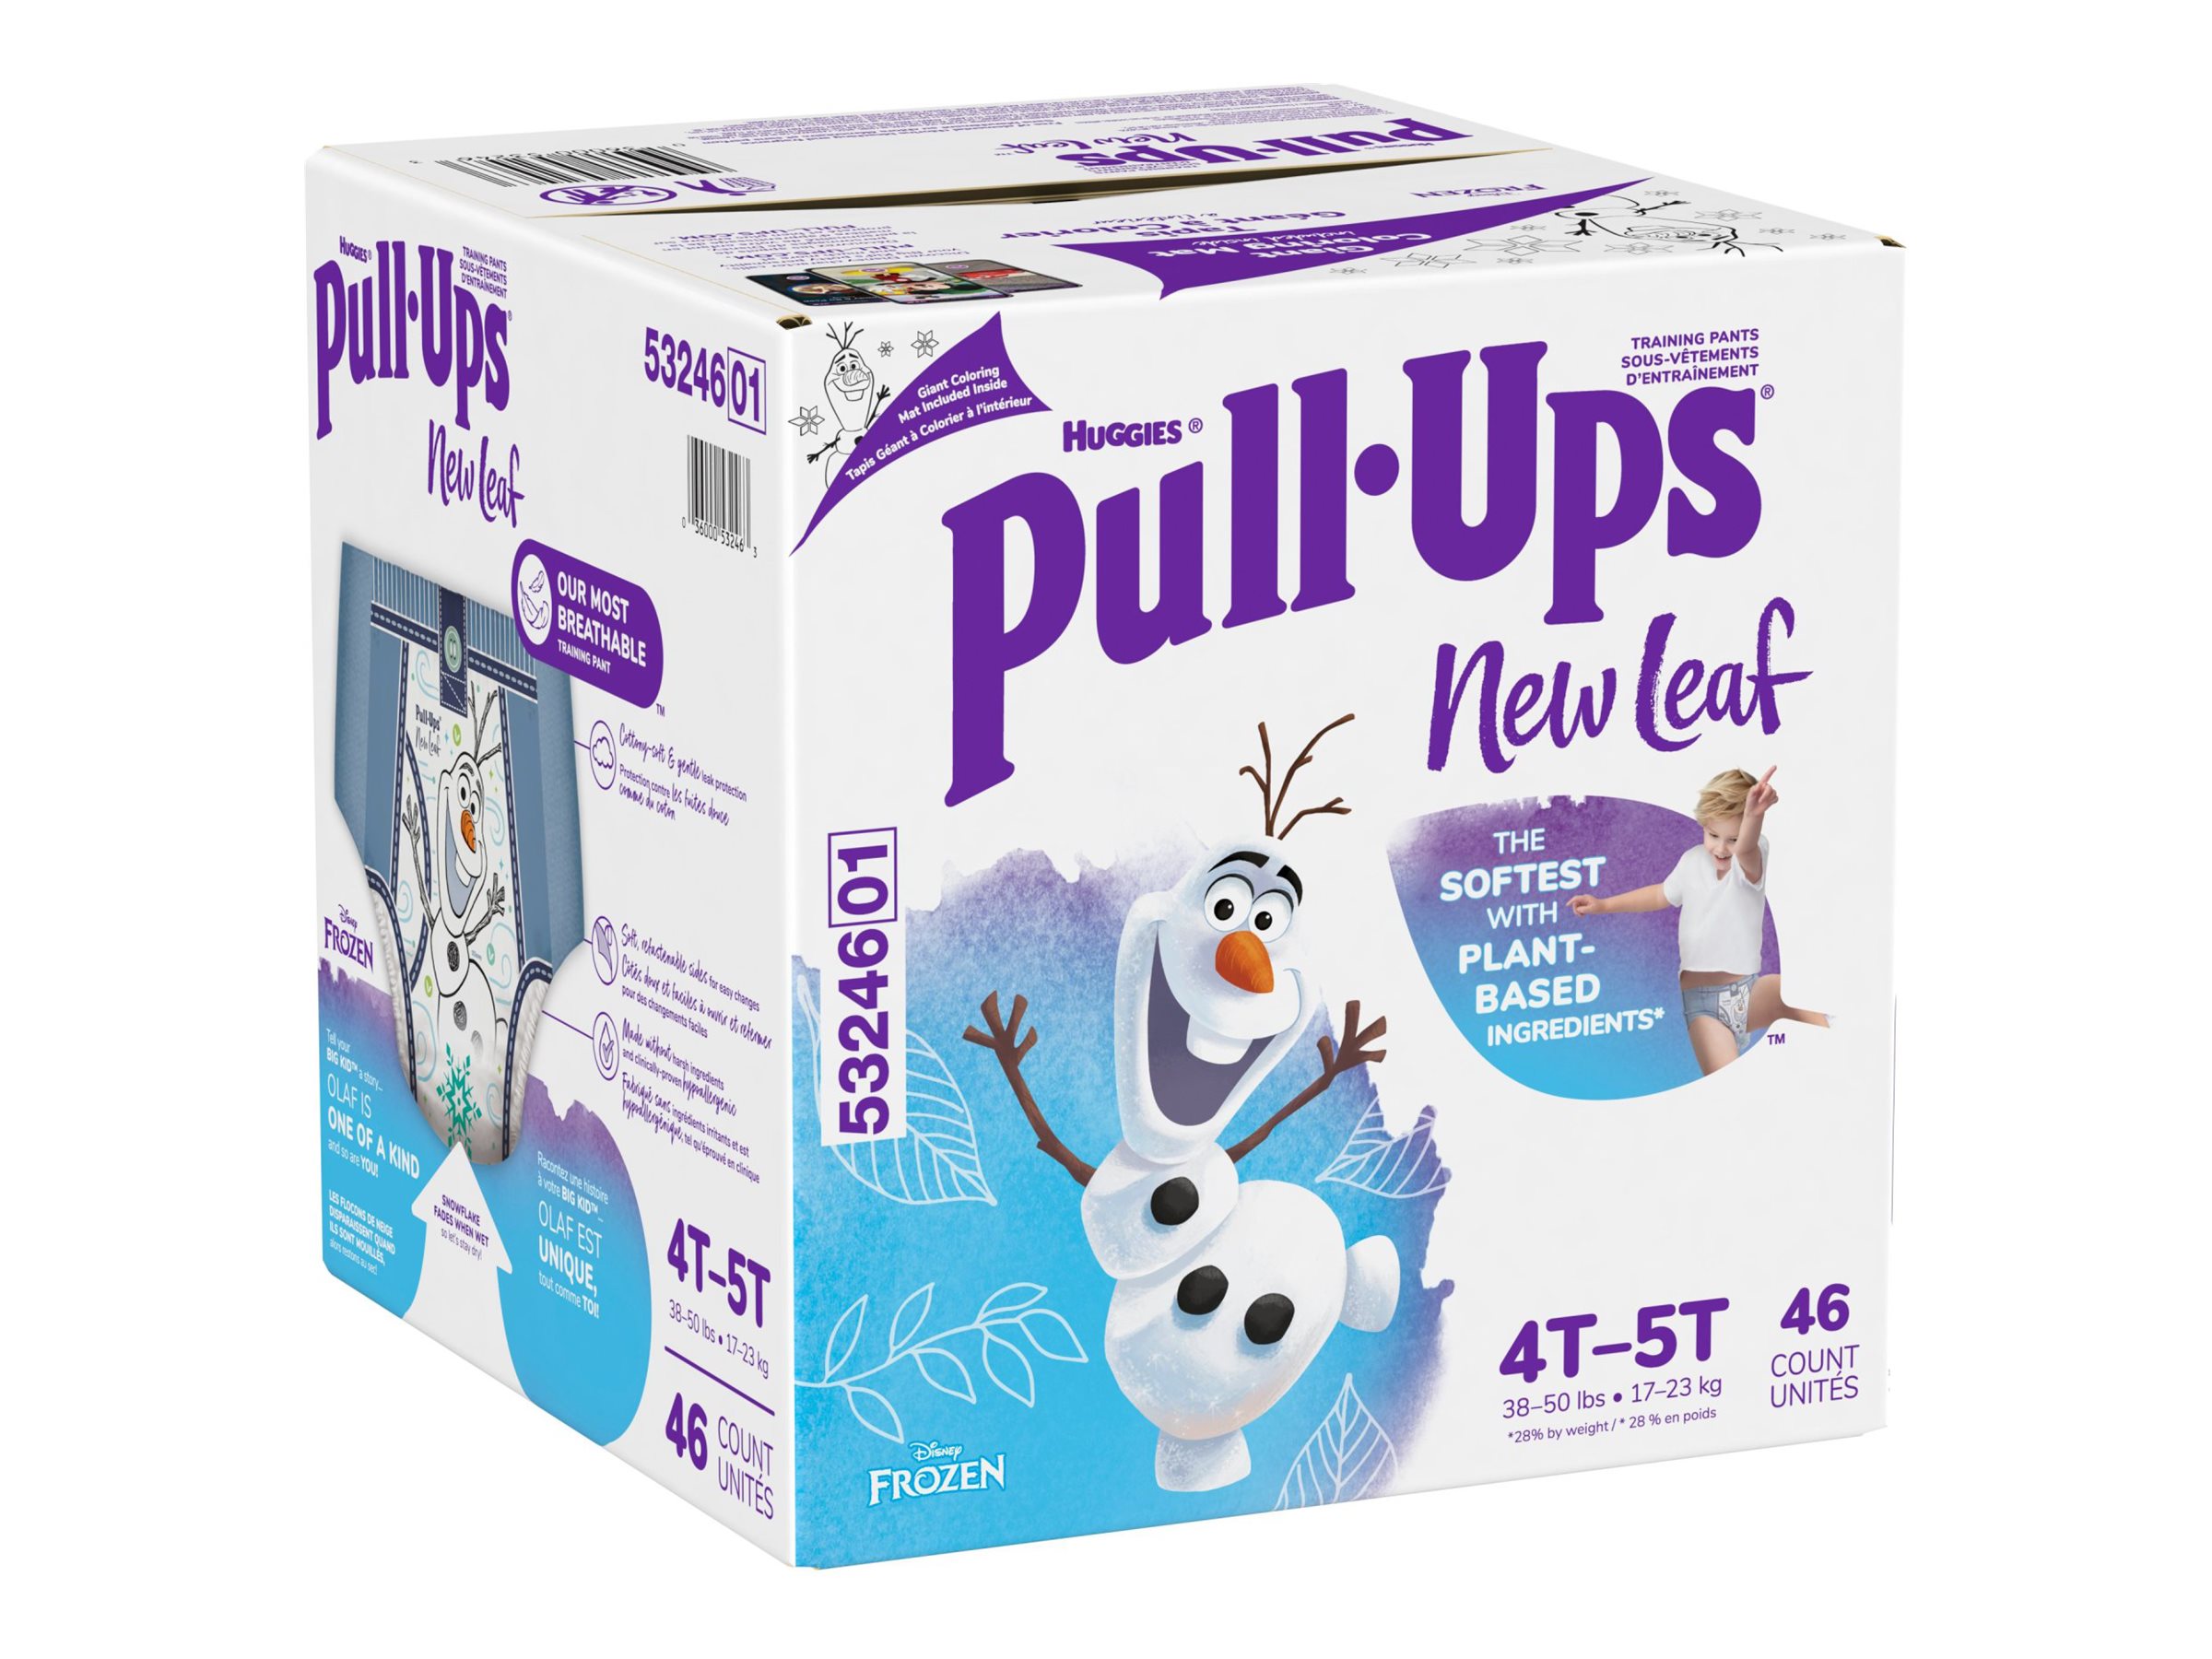 Pull-Ups New Leaf Boys Disney Frozen Potty Training Pants - 4T-5T